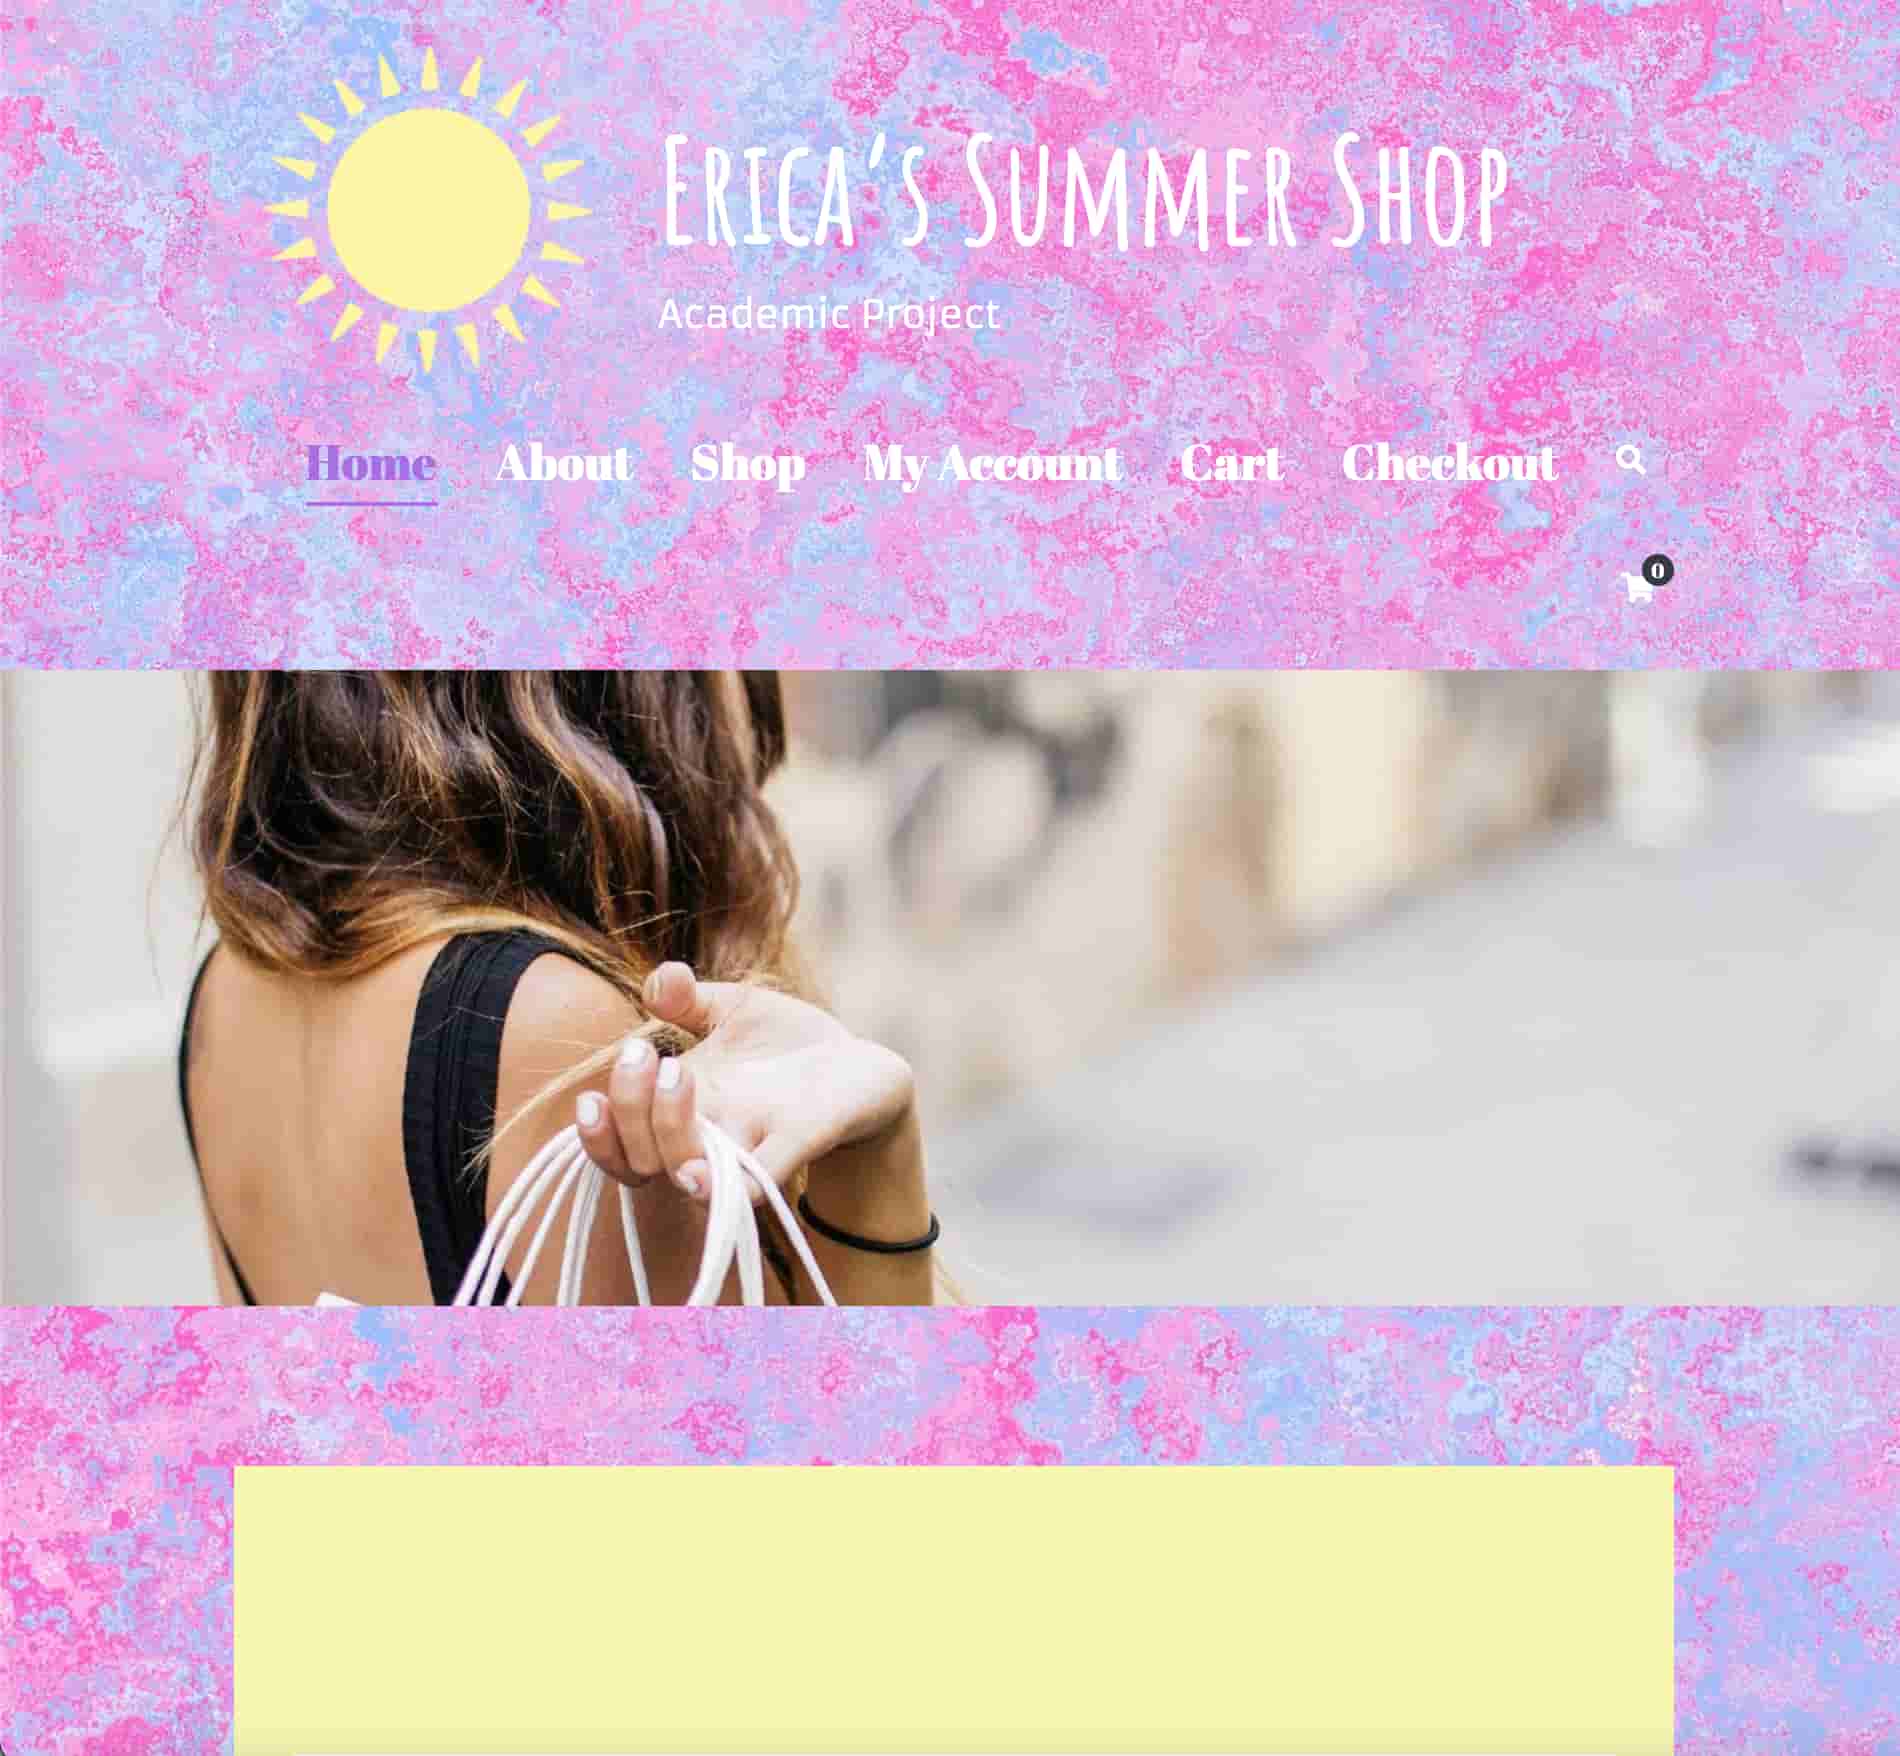 Erica's Summer Shop Website